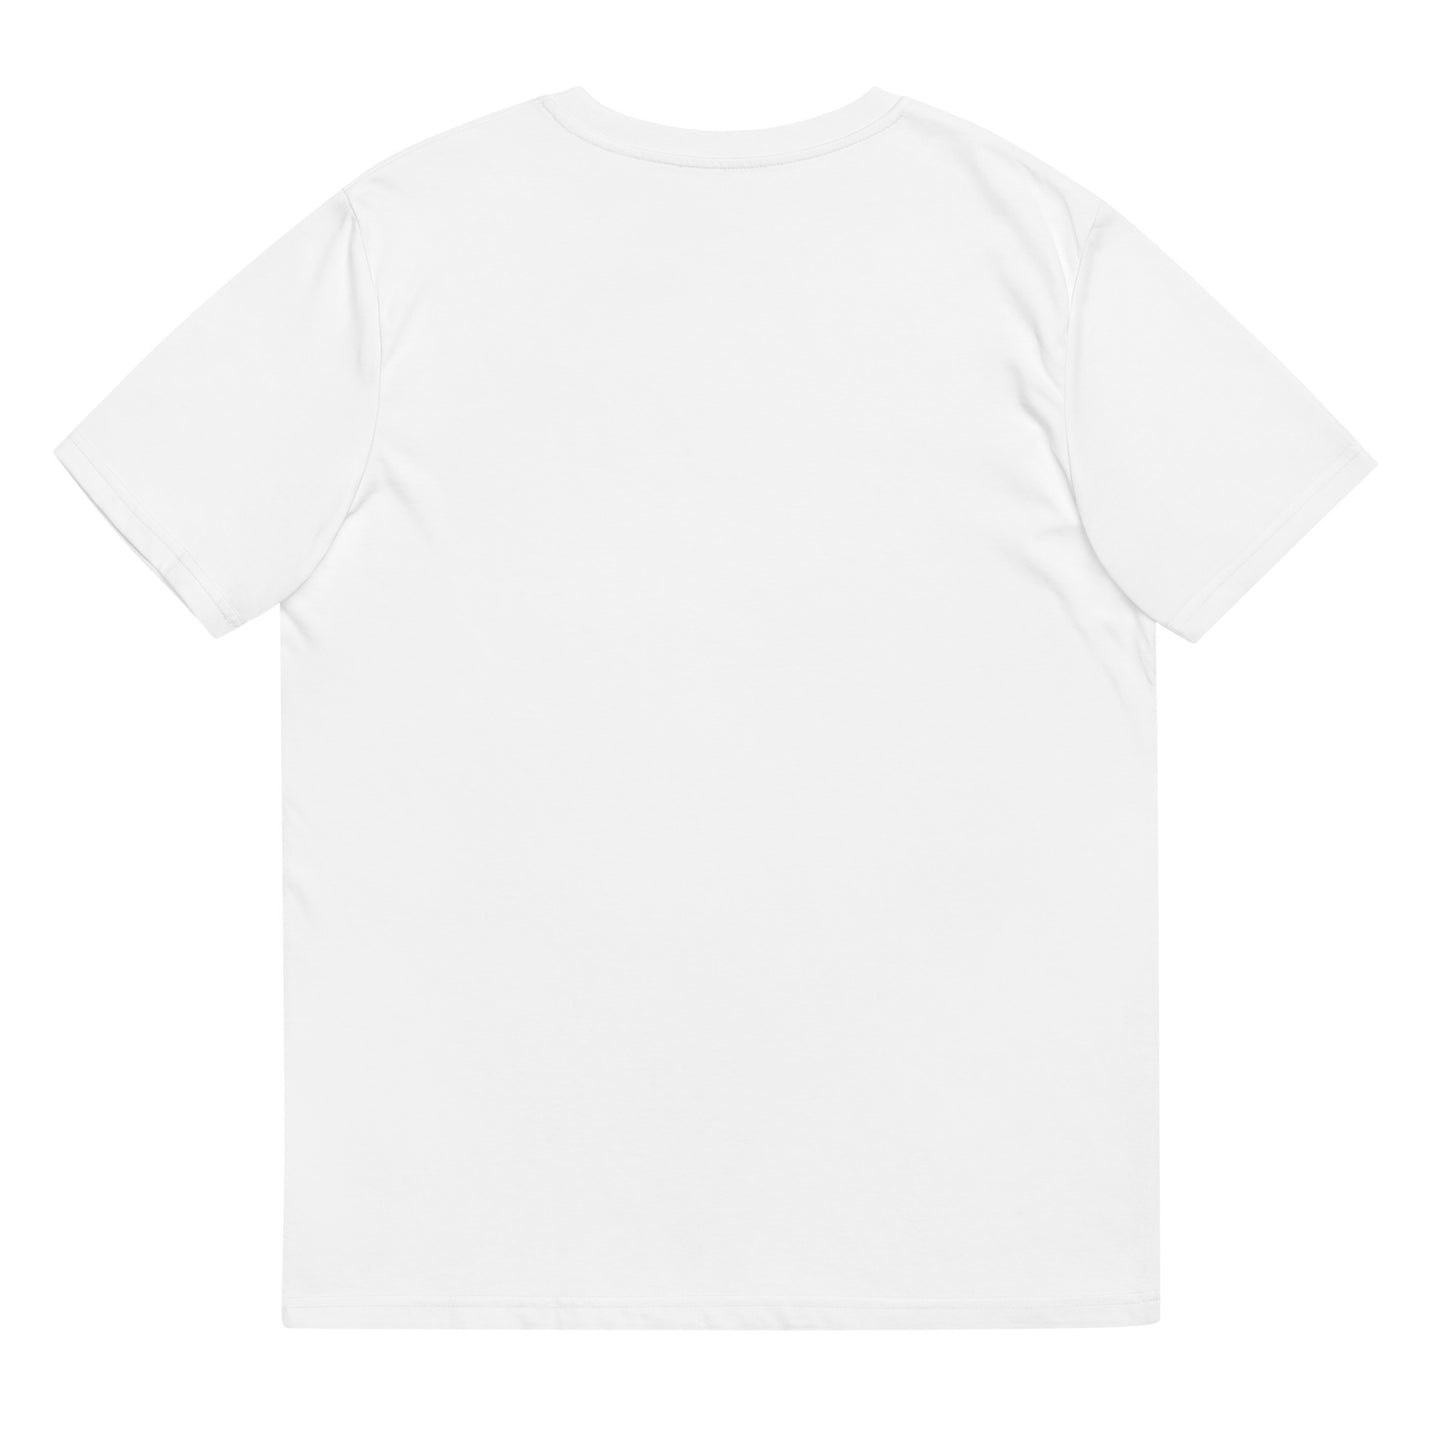 Aléa - Unisex organic cotton T-shirt